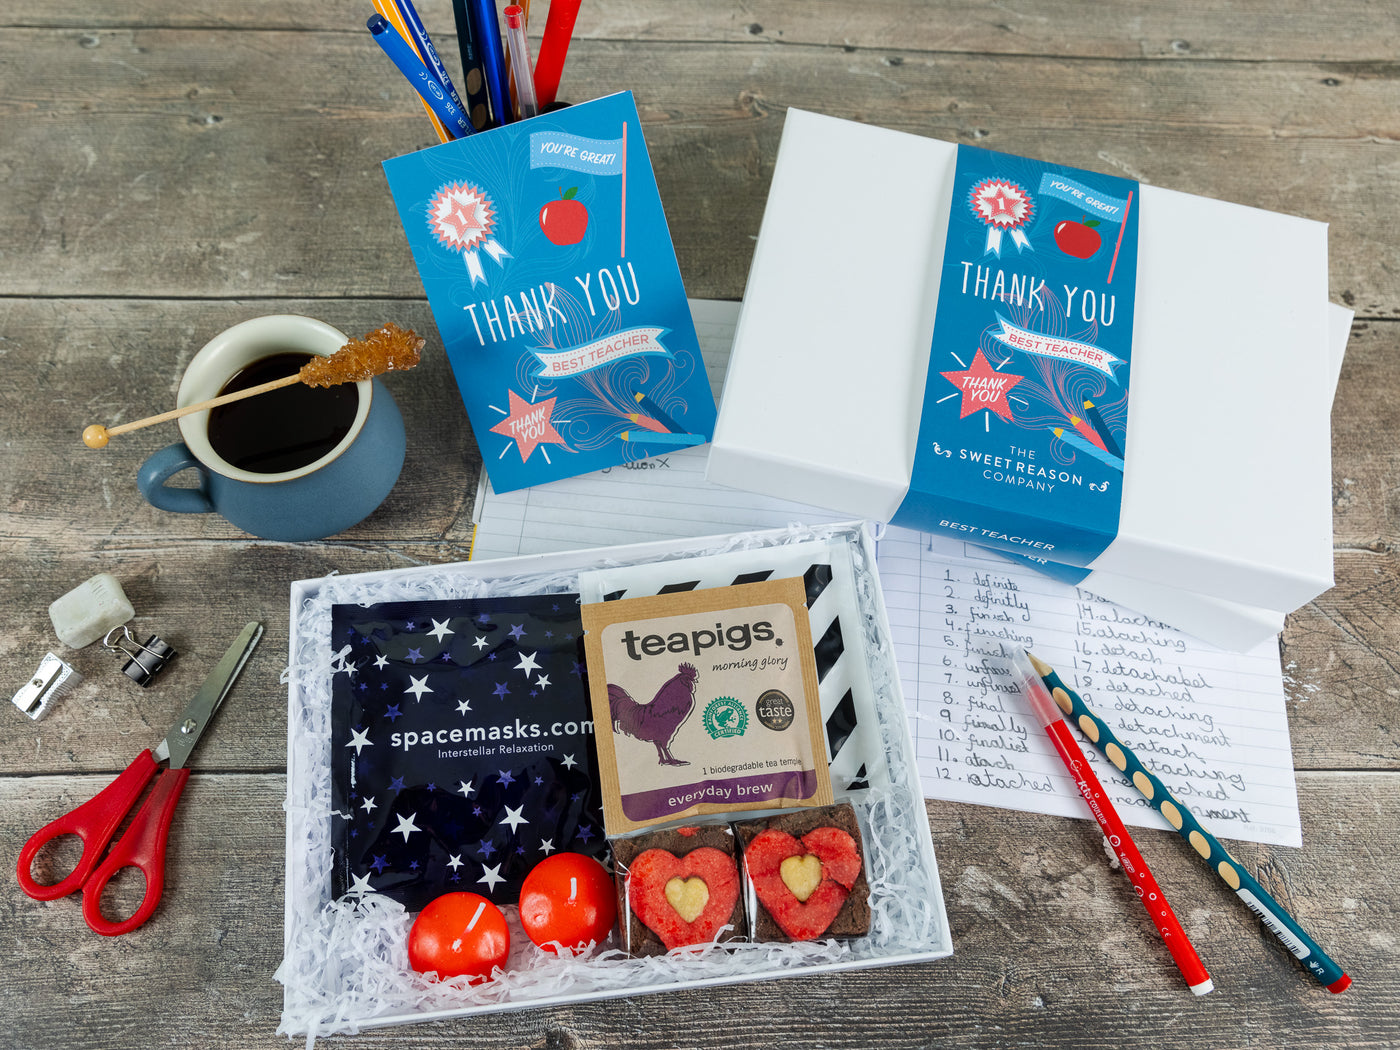 'Thank You Teacher' Treats, Tea & Coffee Gift